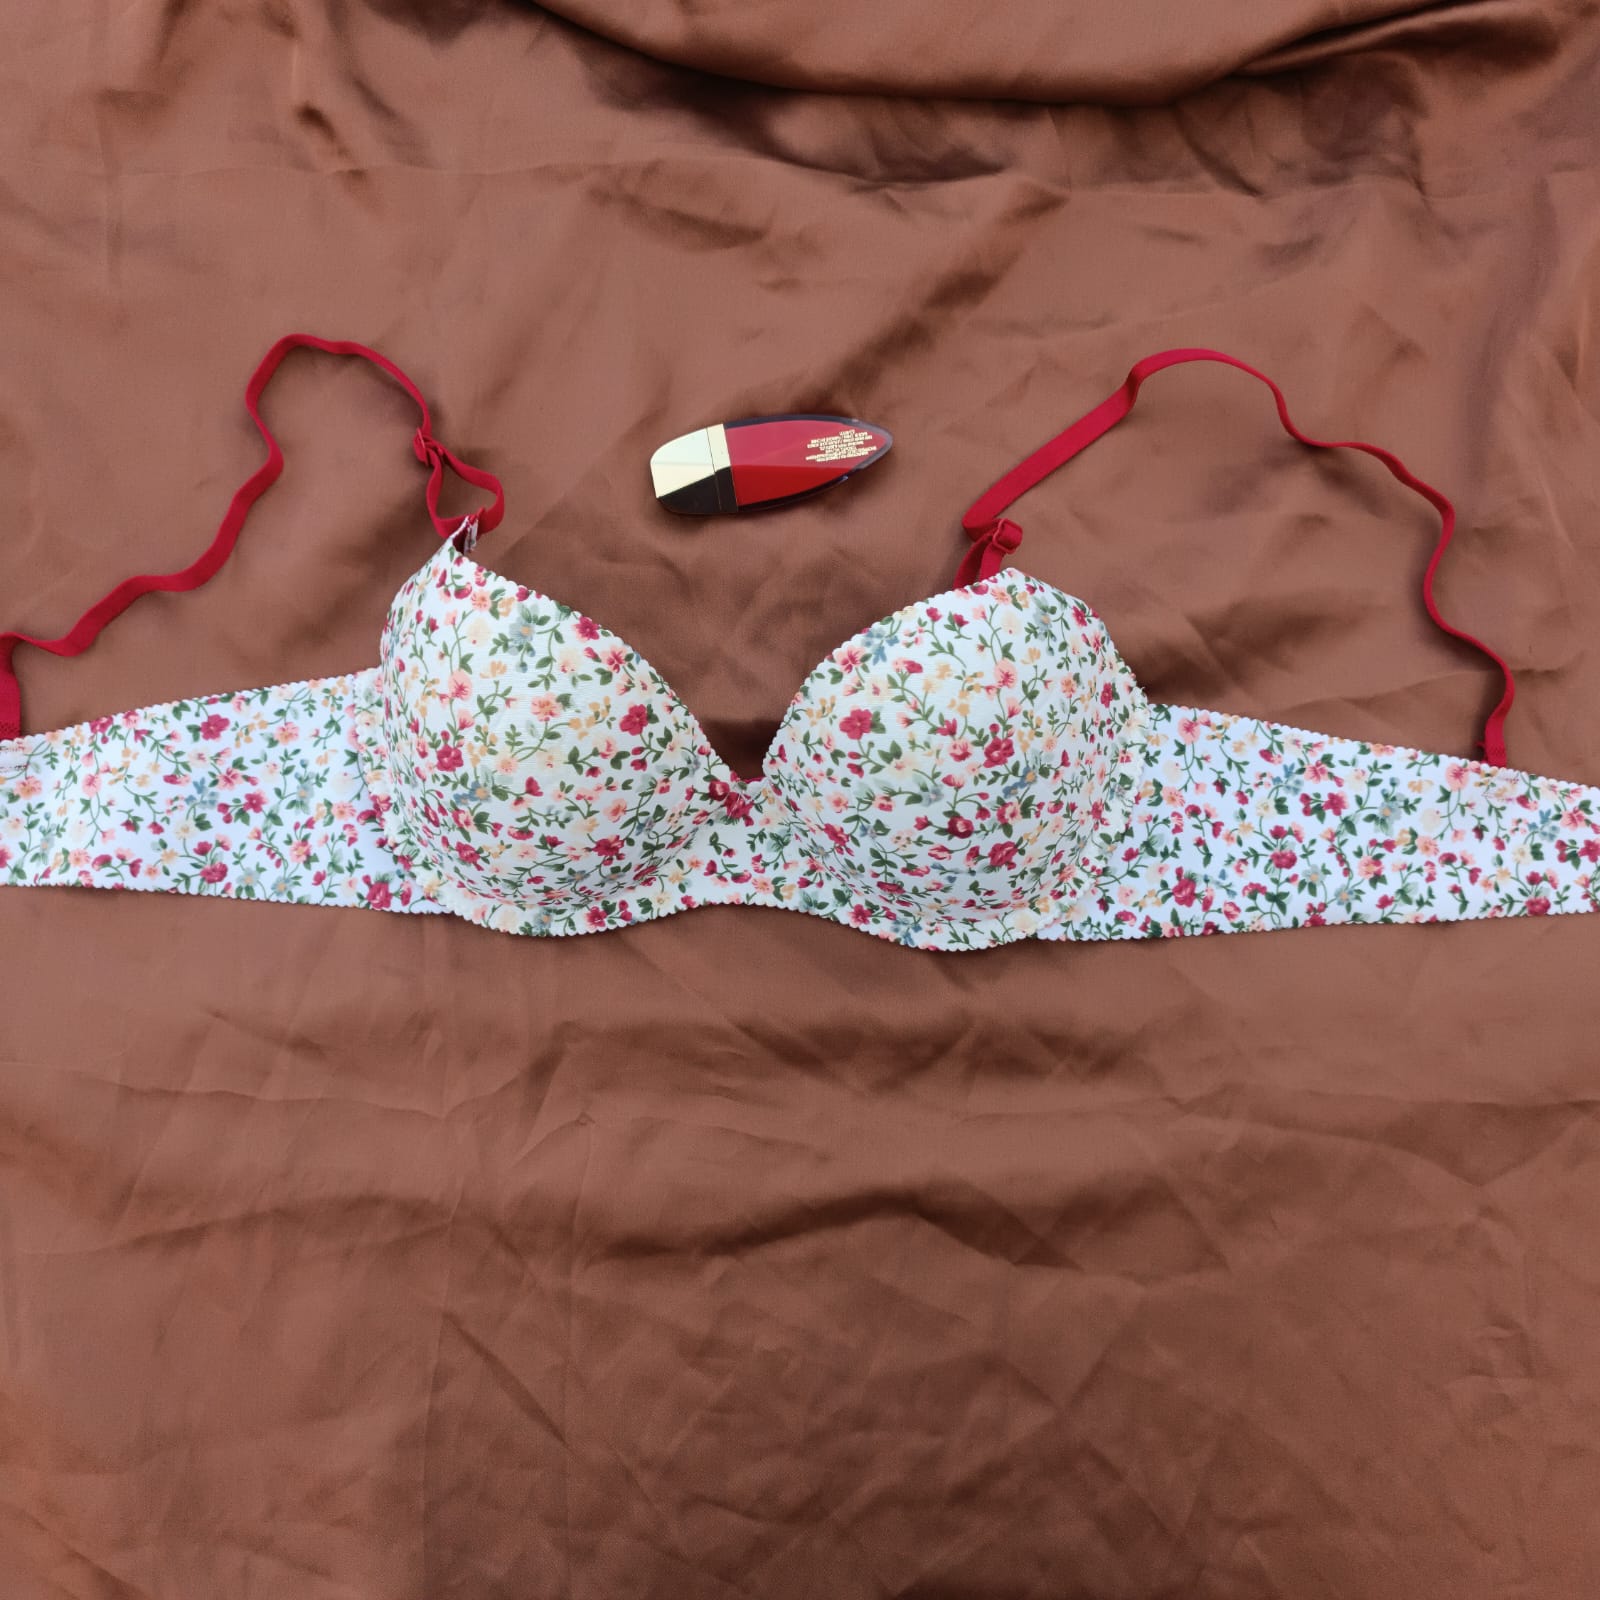 Victoria's Secret - Pink Single Padded Pushup Bra And Panty Set